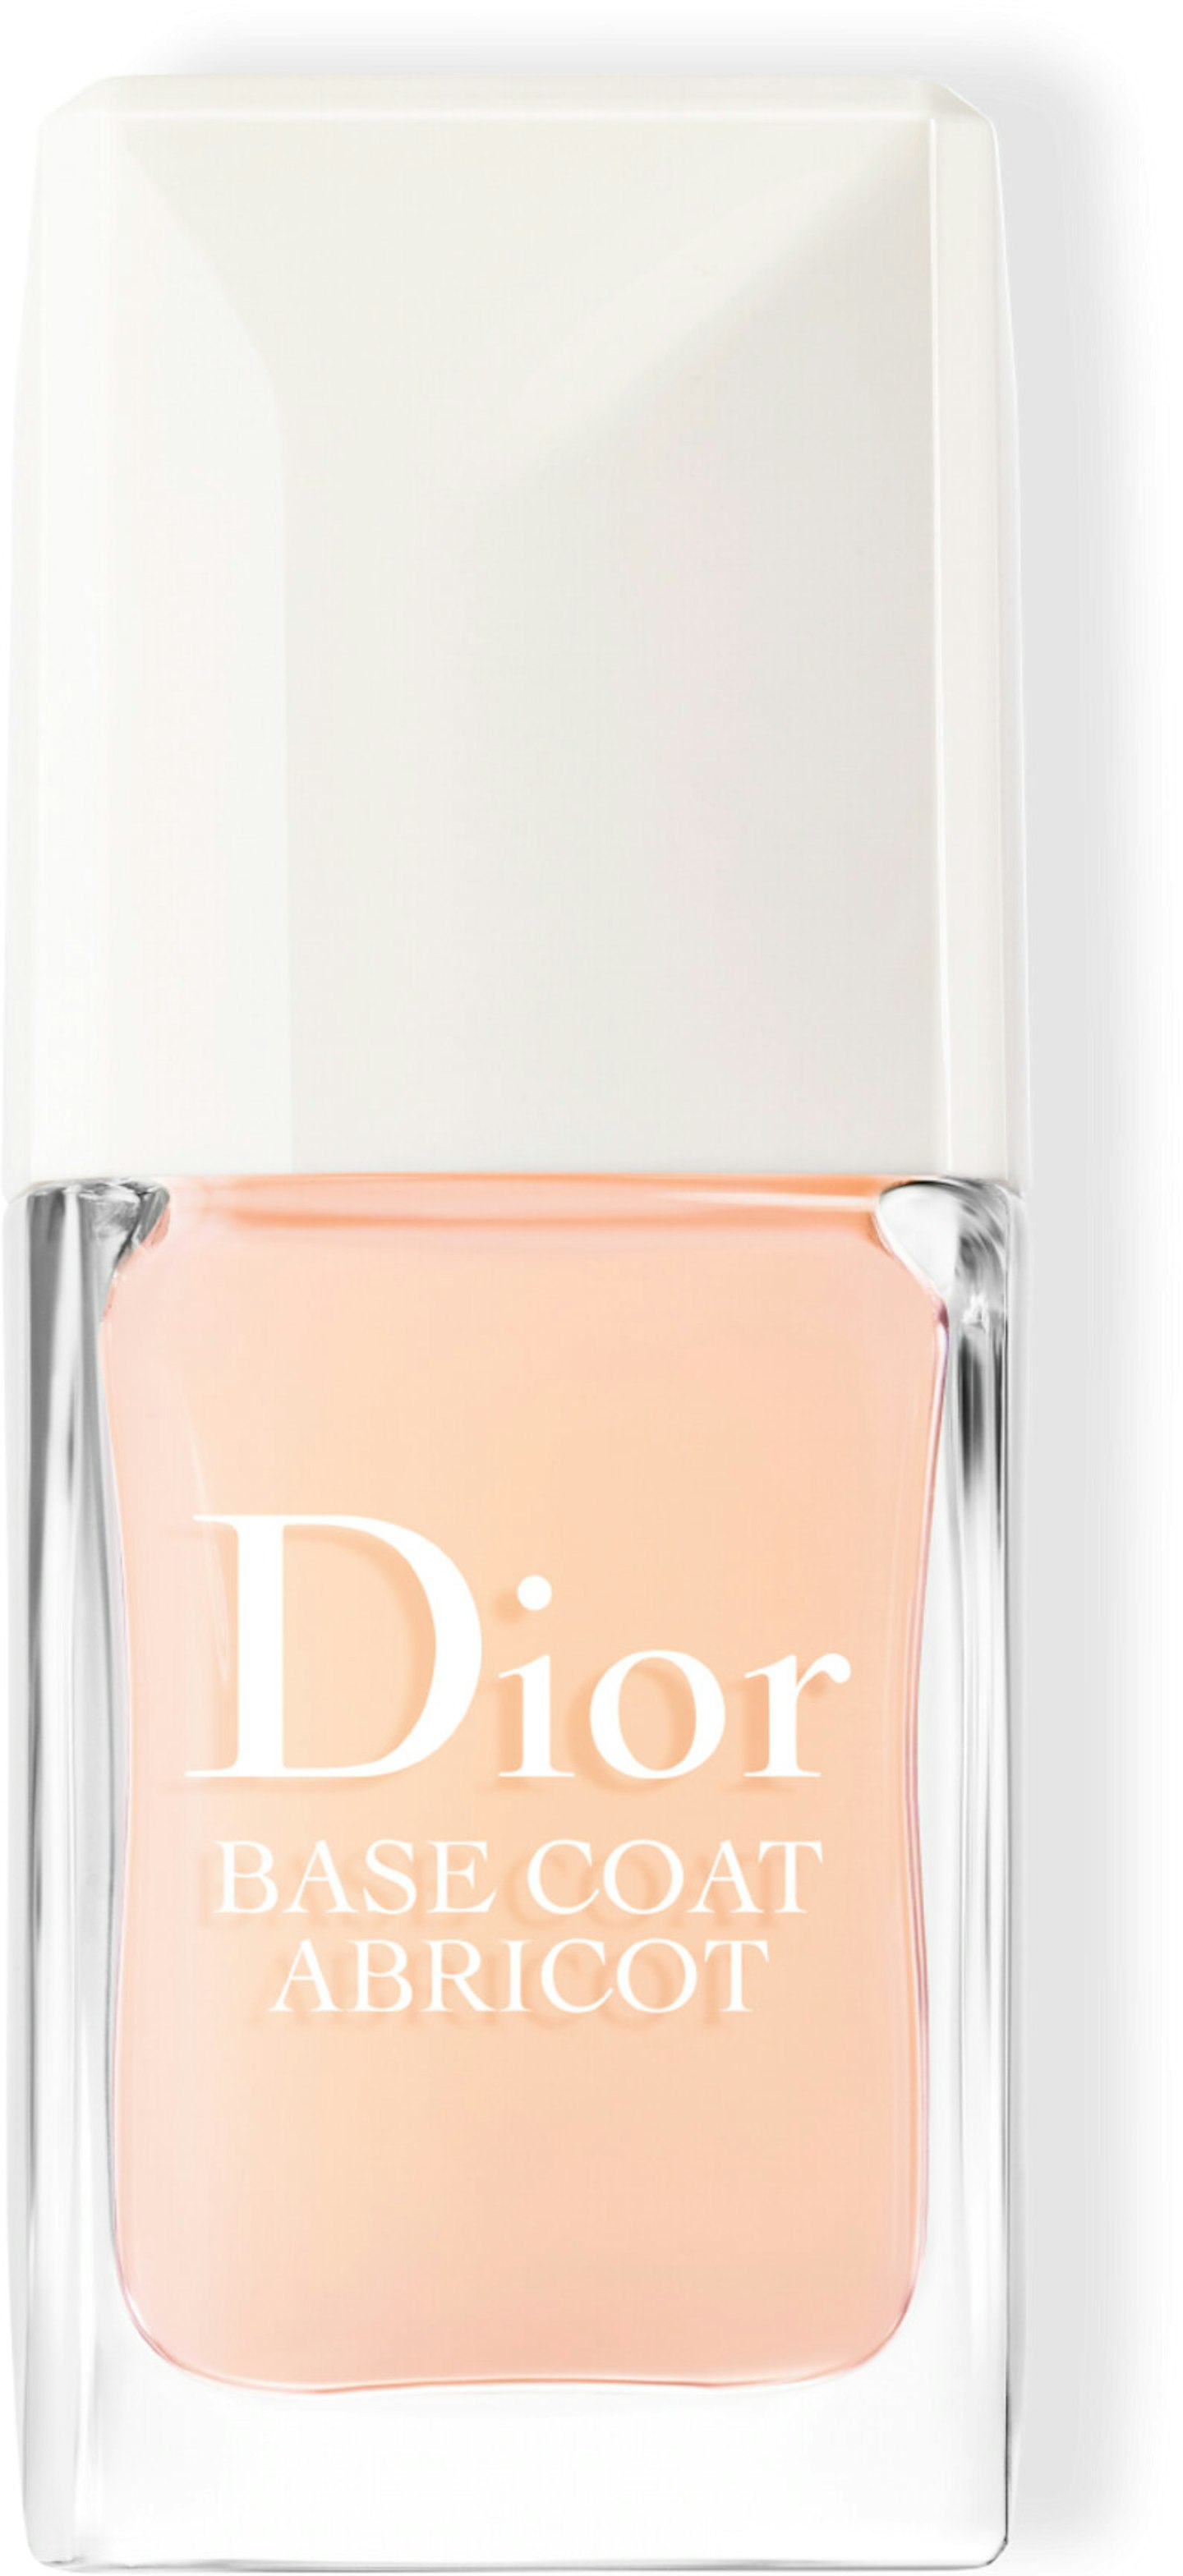  Dior Base Coat Abricot